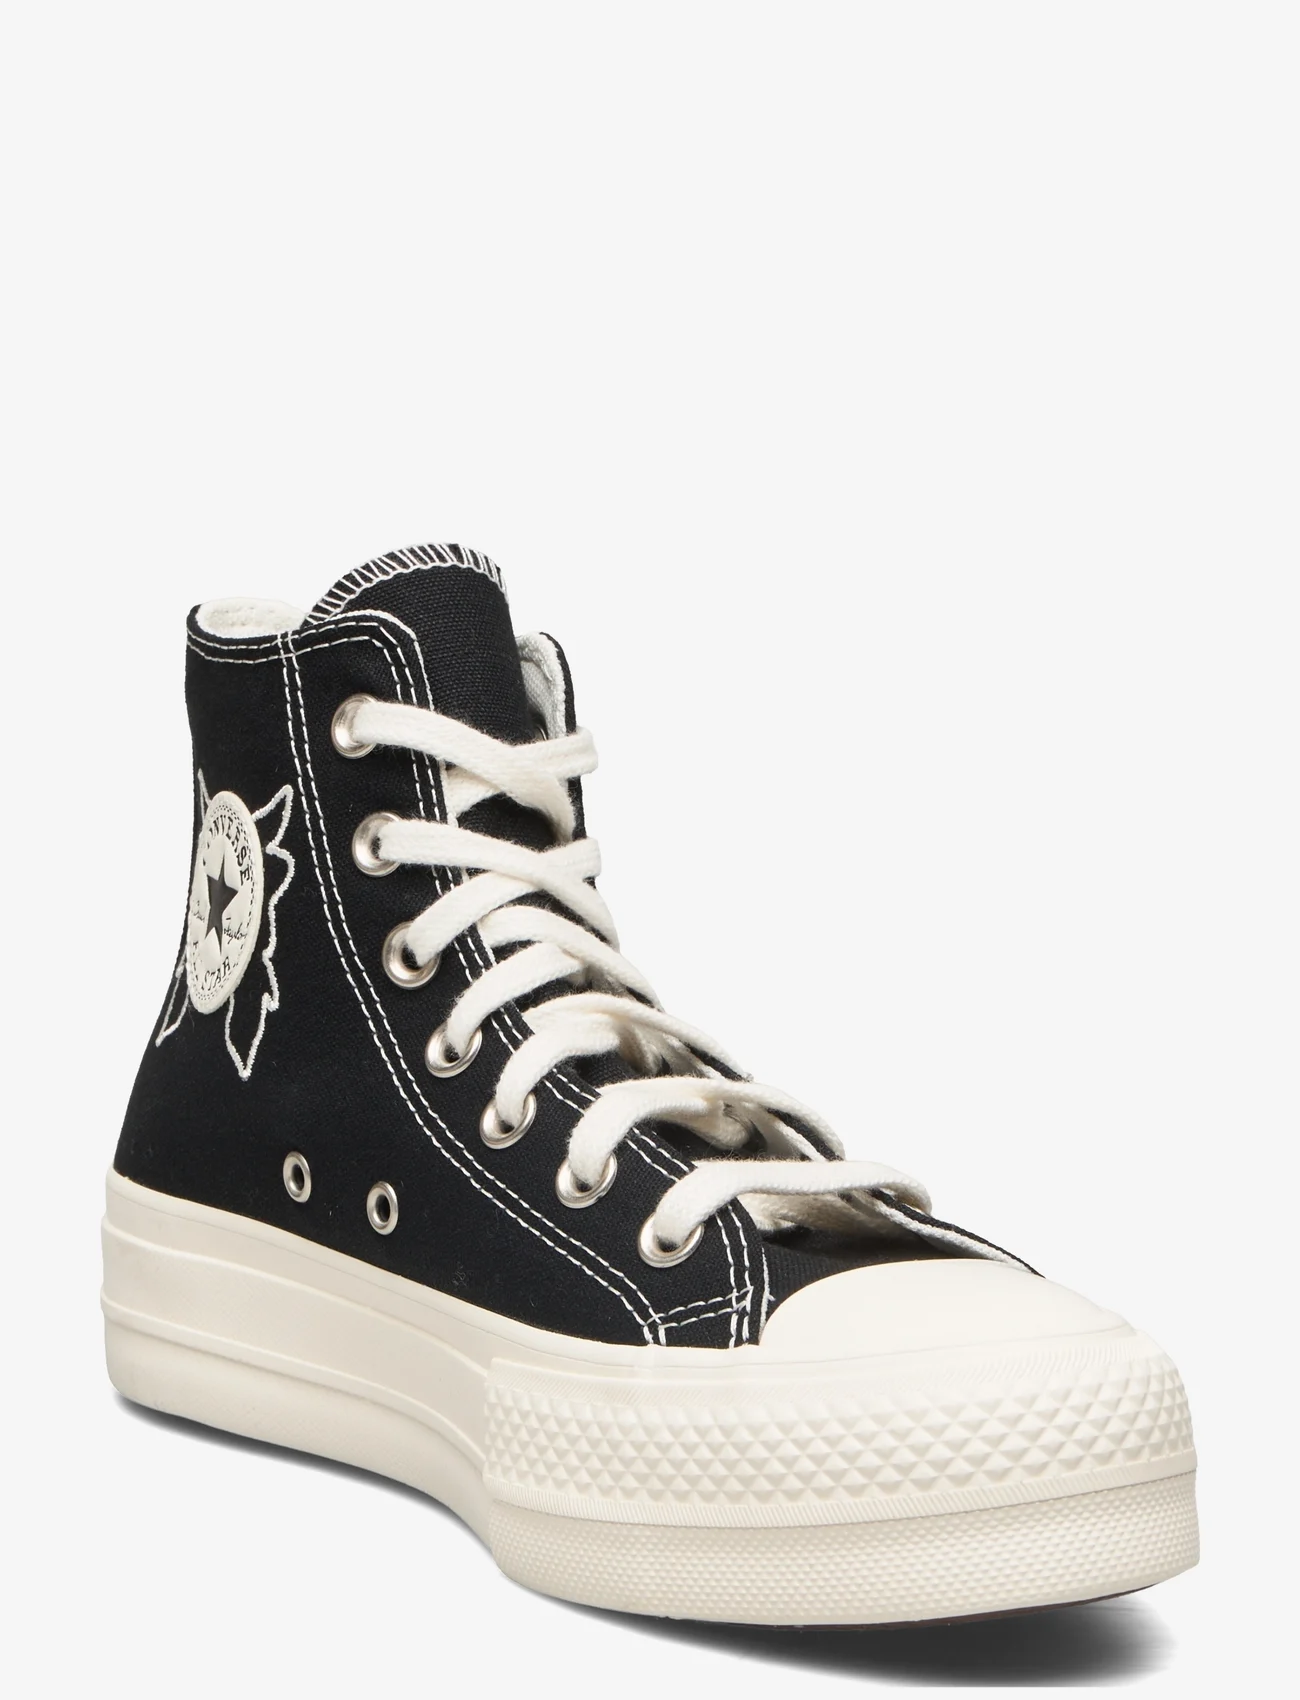 Converse - Chuck Taylor All Star Lift - hoge sneakers - black/black/egret - 0